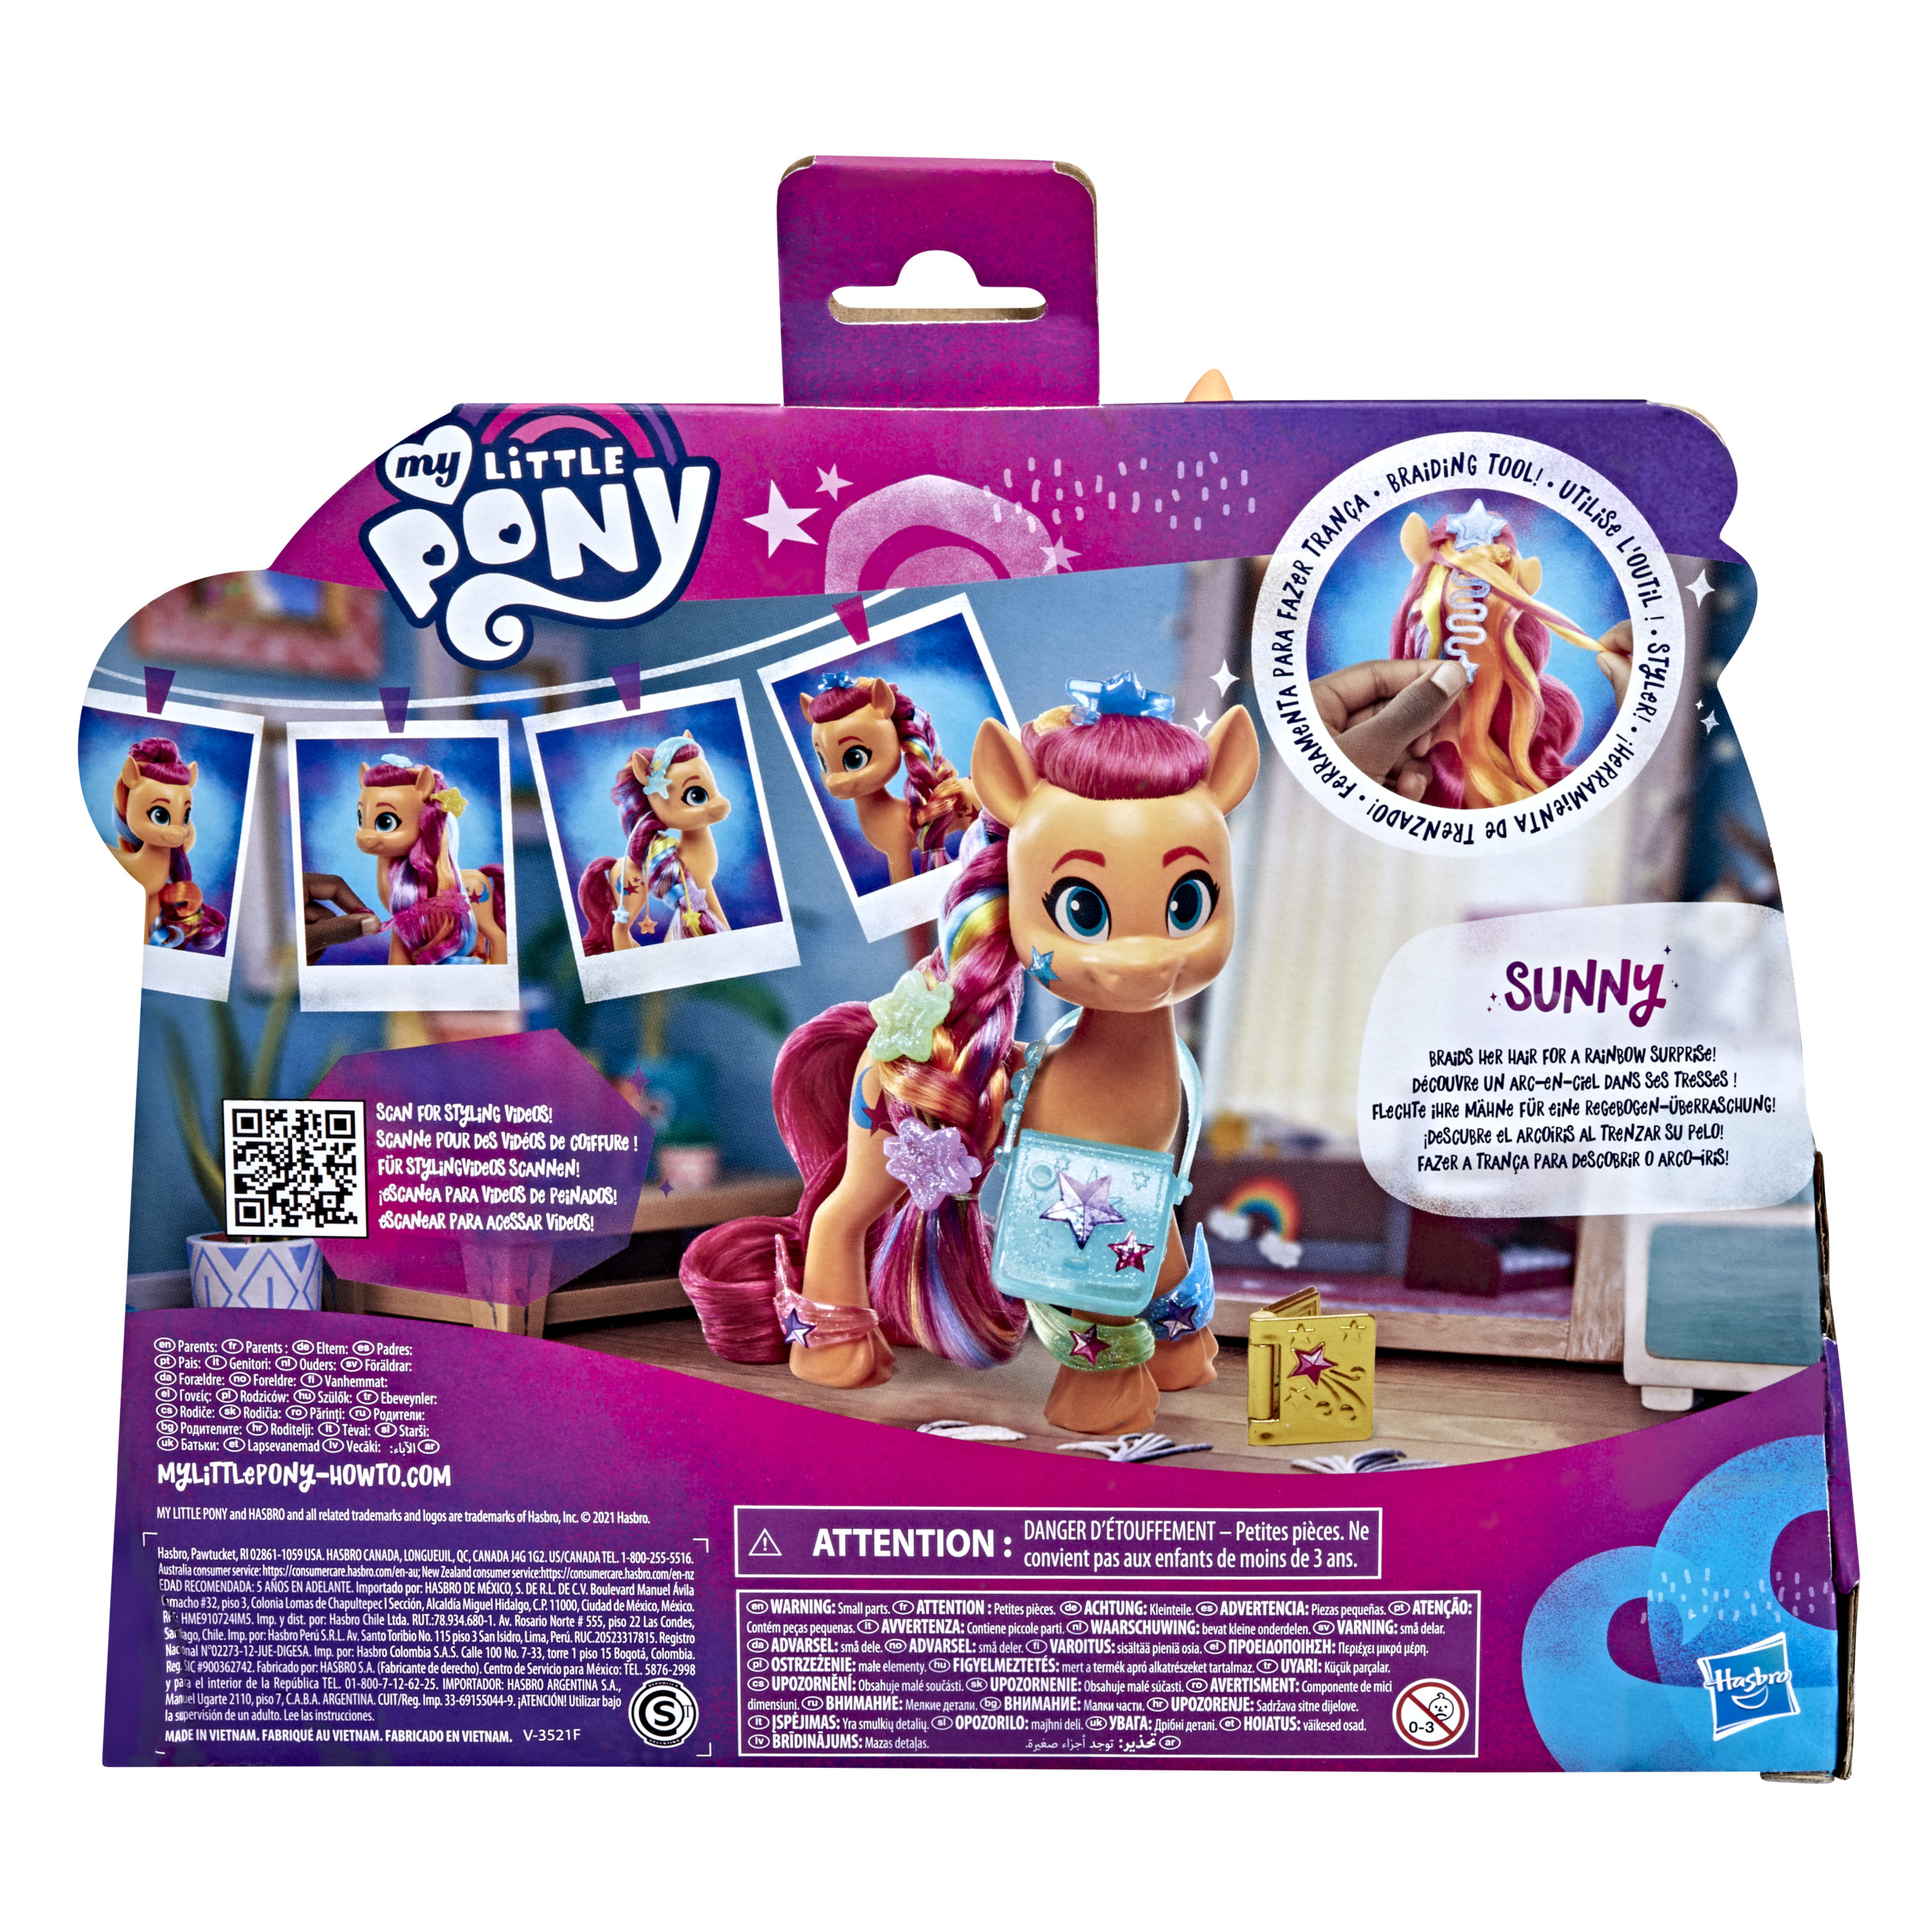 A - MY LITTLE Generation Pony: Sunny Figura PONY Peinados My New Little mágicos Starscout